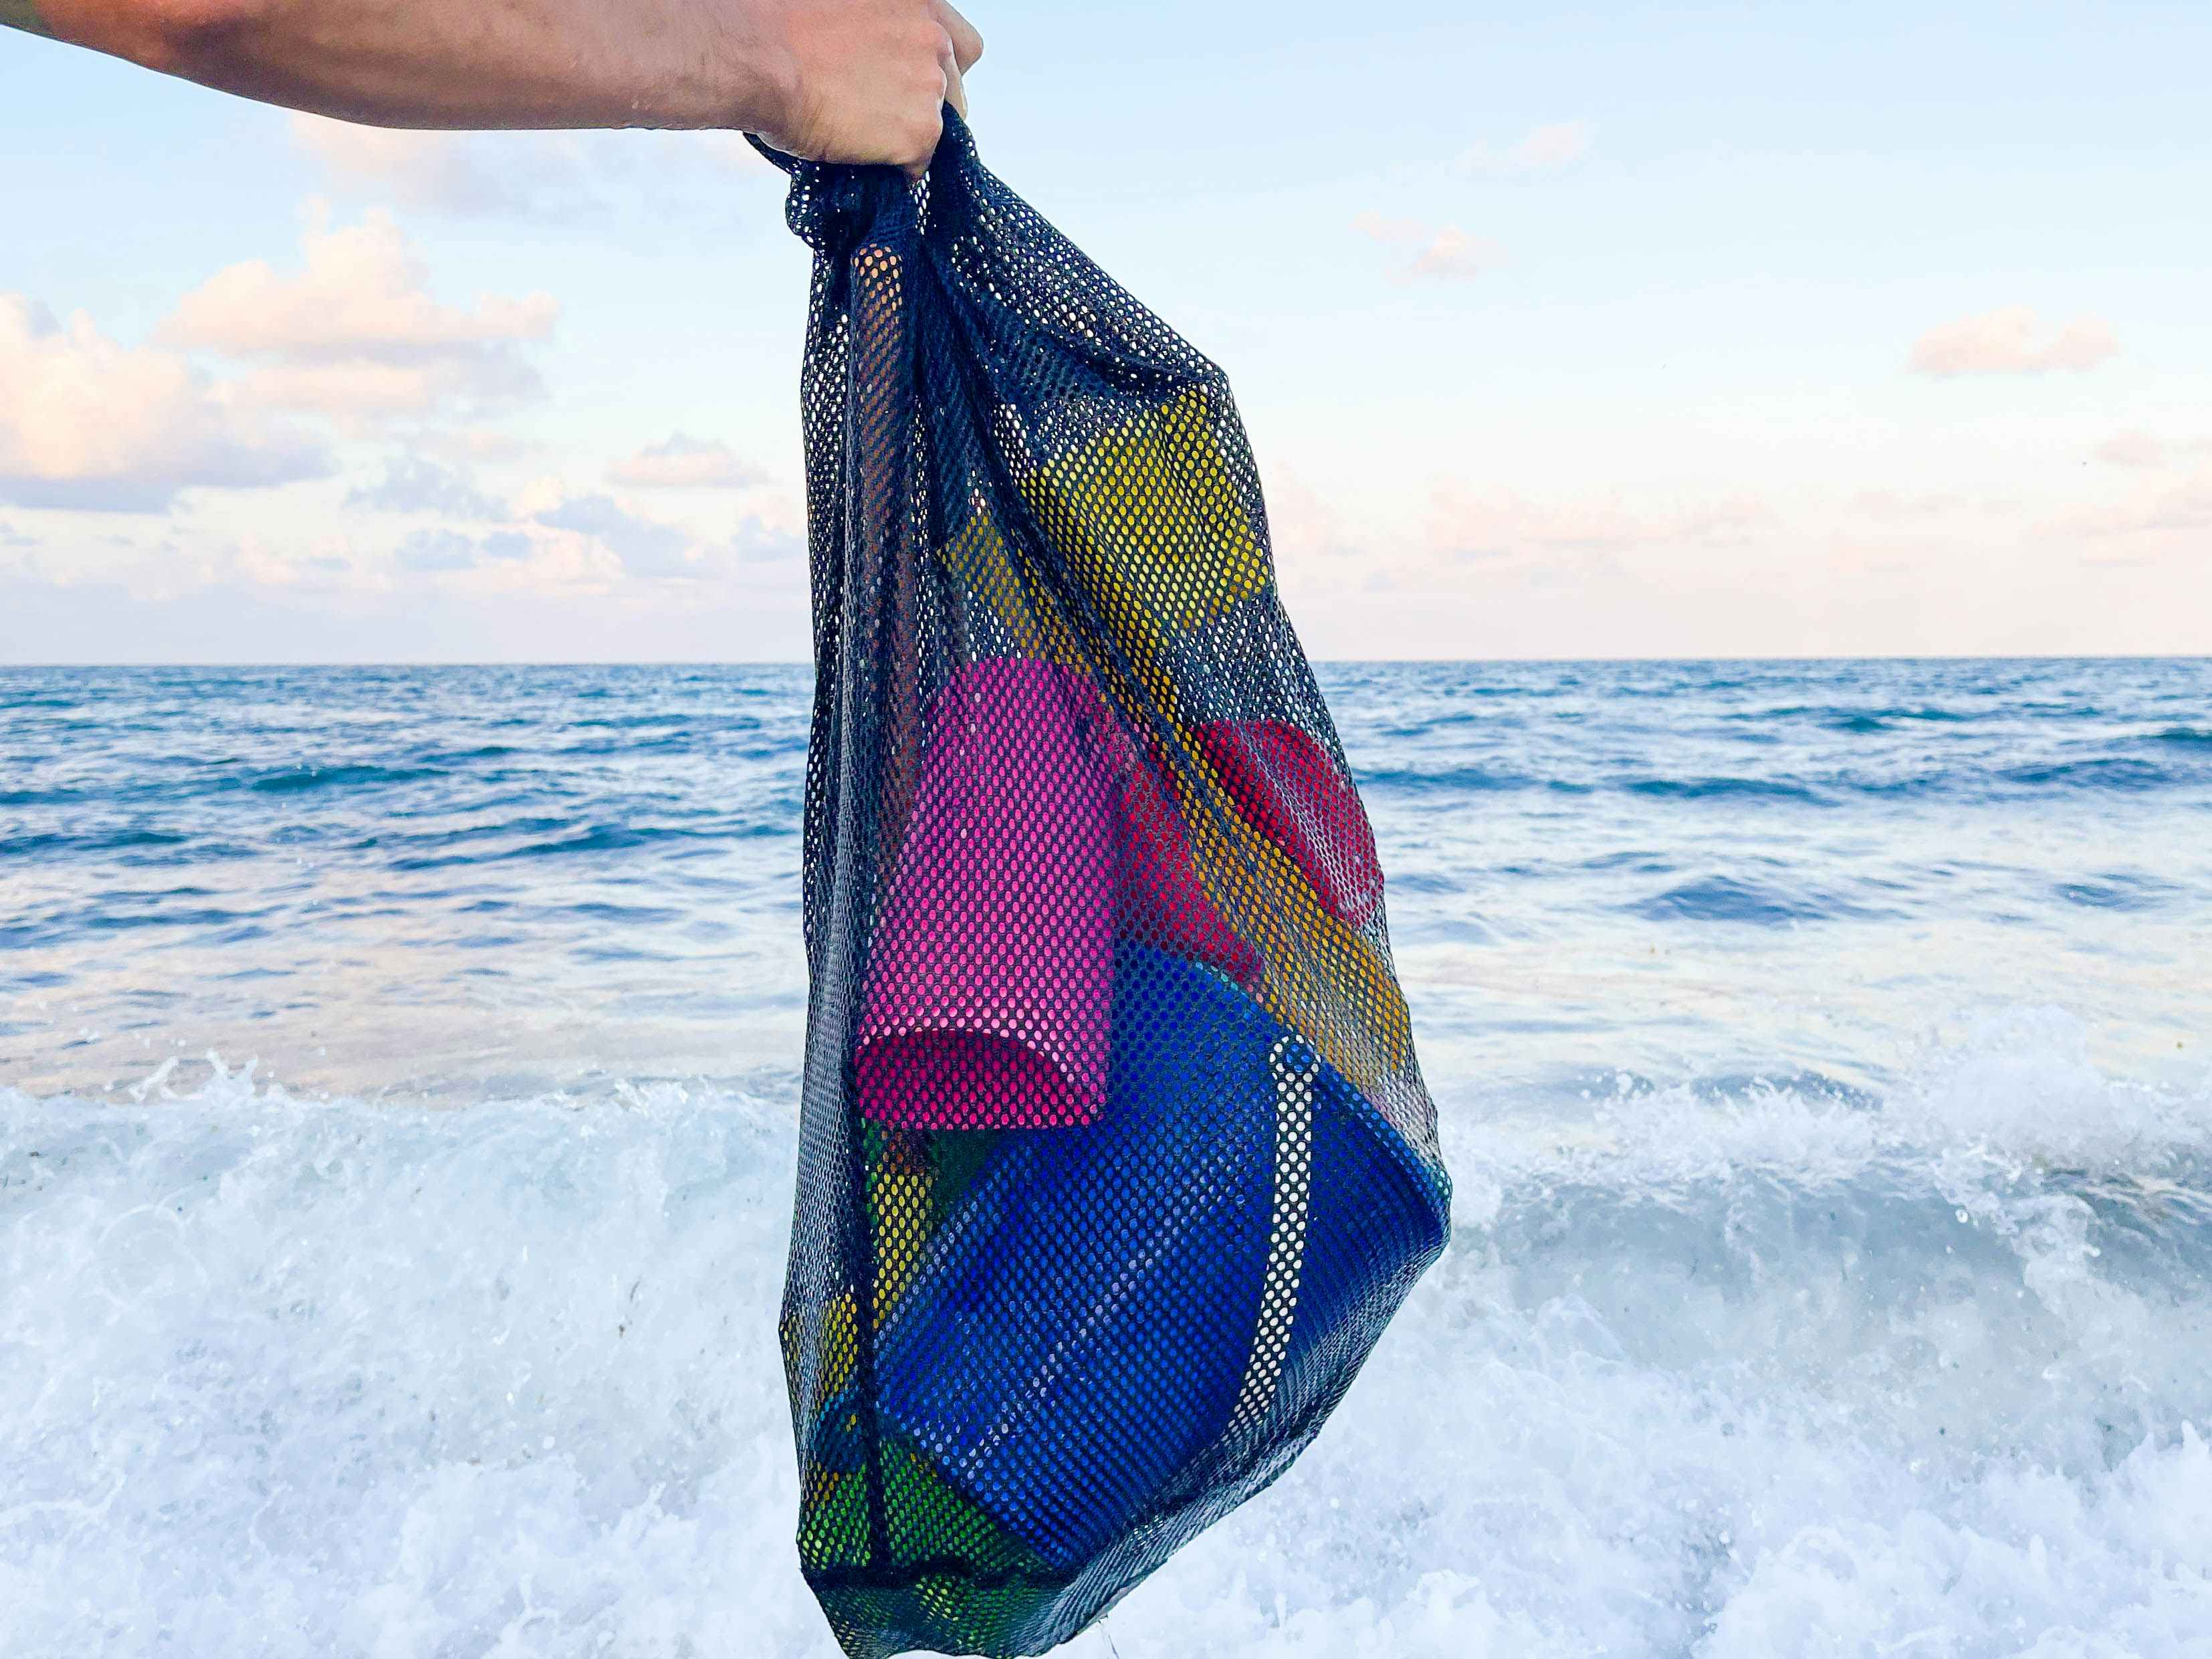 mesh bag full of toys held over ocean water